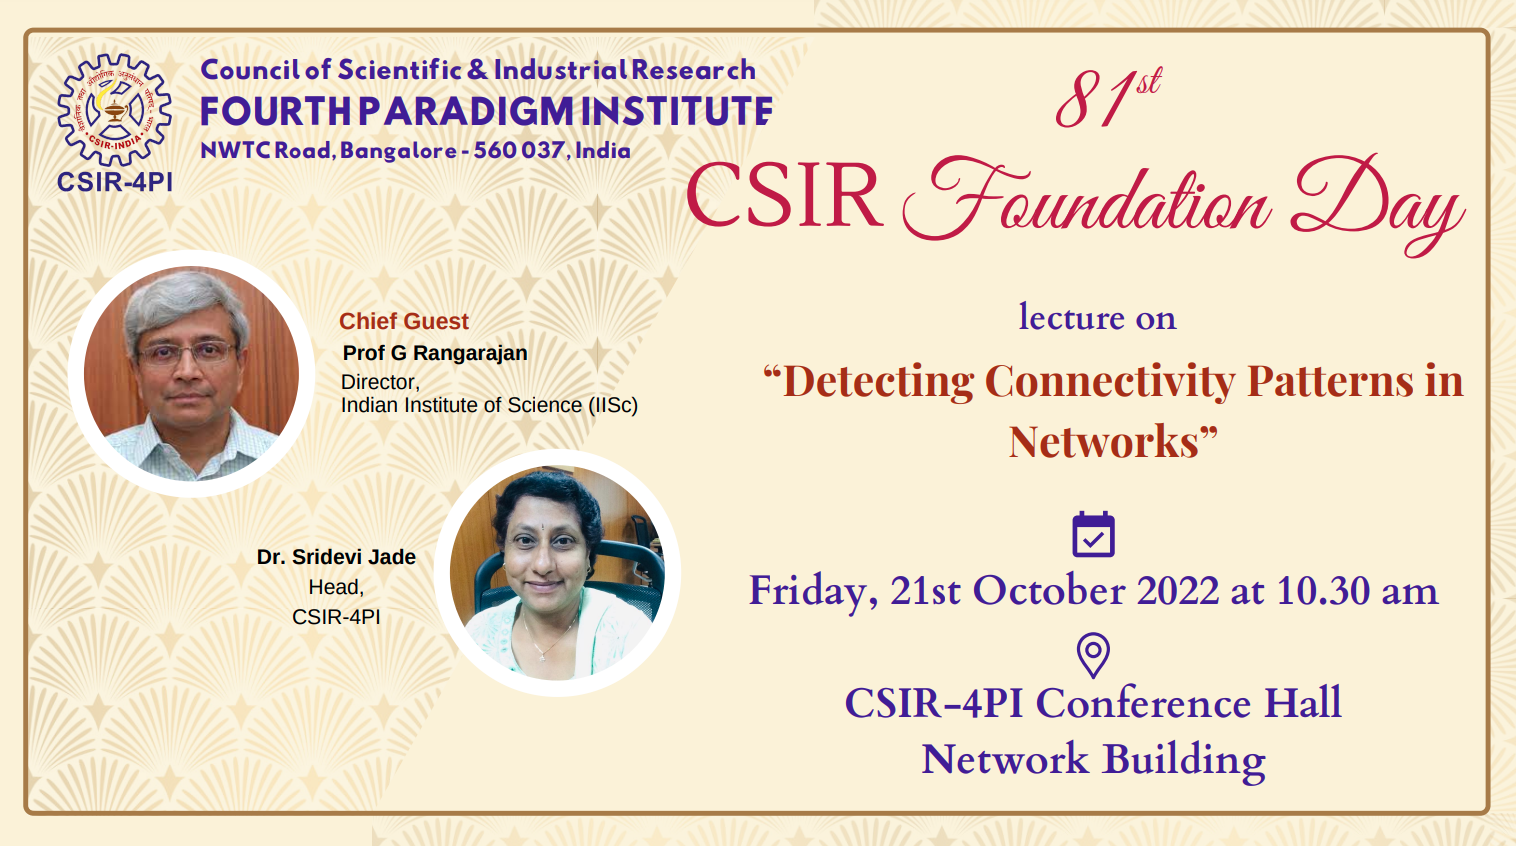 Celebration of CSIR foundation day at CSIR-4PI